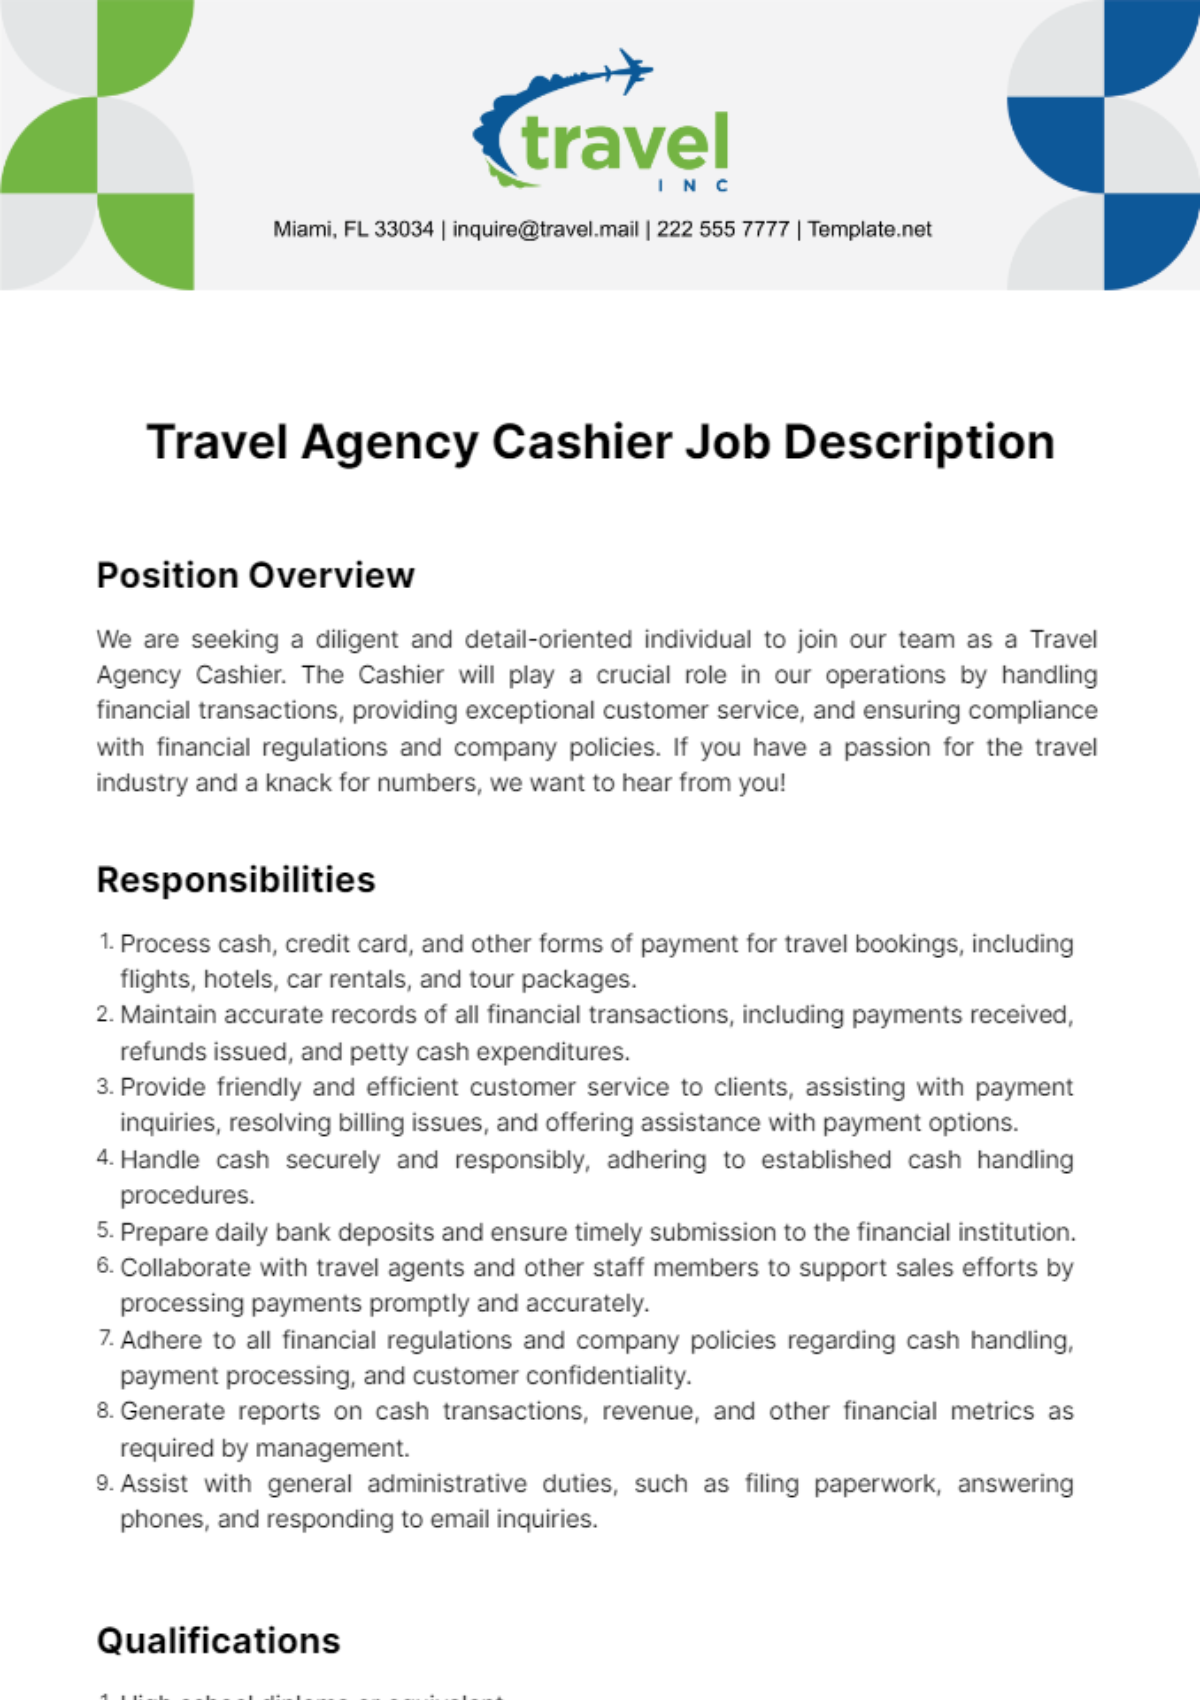 Travel Agency Cashier Job Description Template